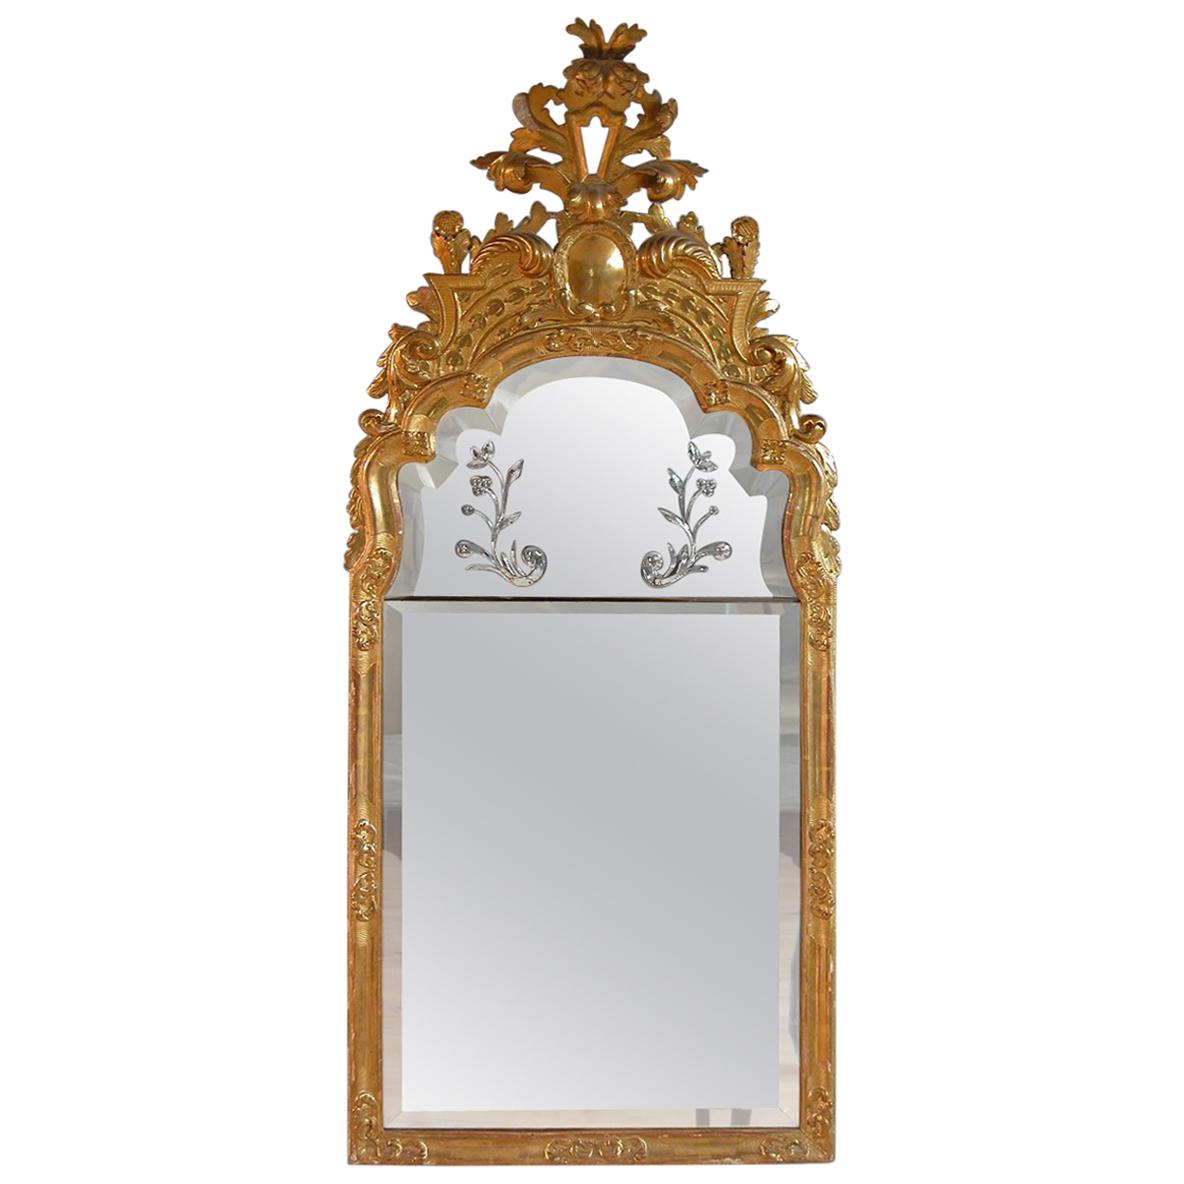 Burchard Precht Attributed Baroque Mirror, Origin Stockholm, Sweden